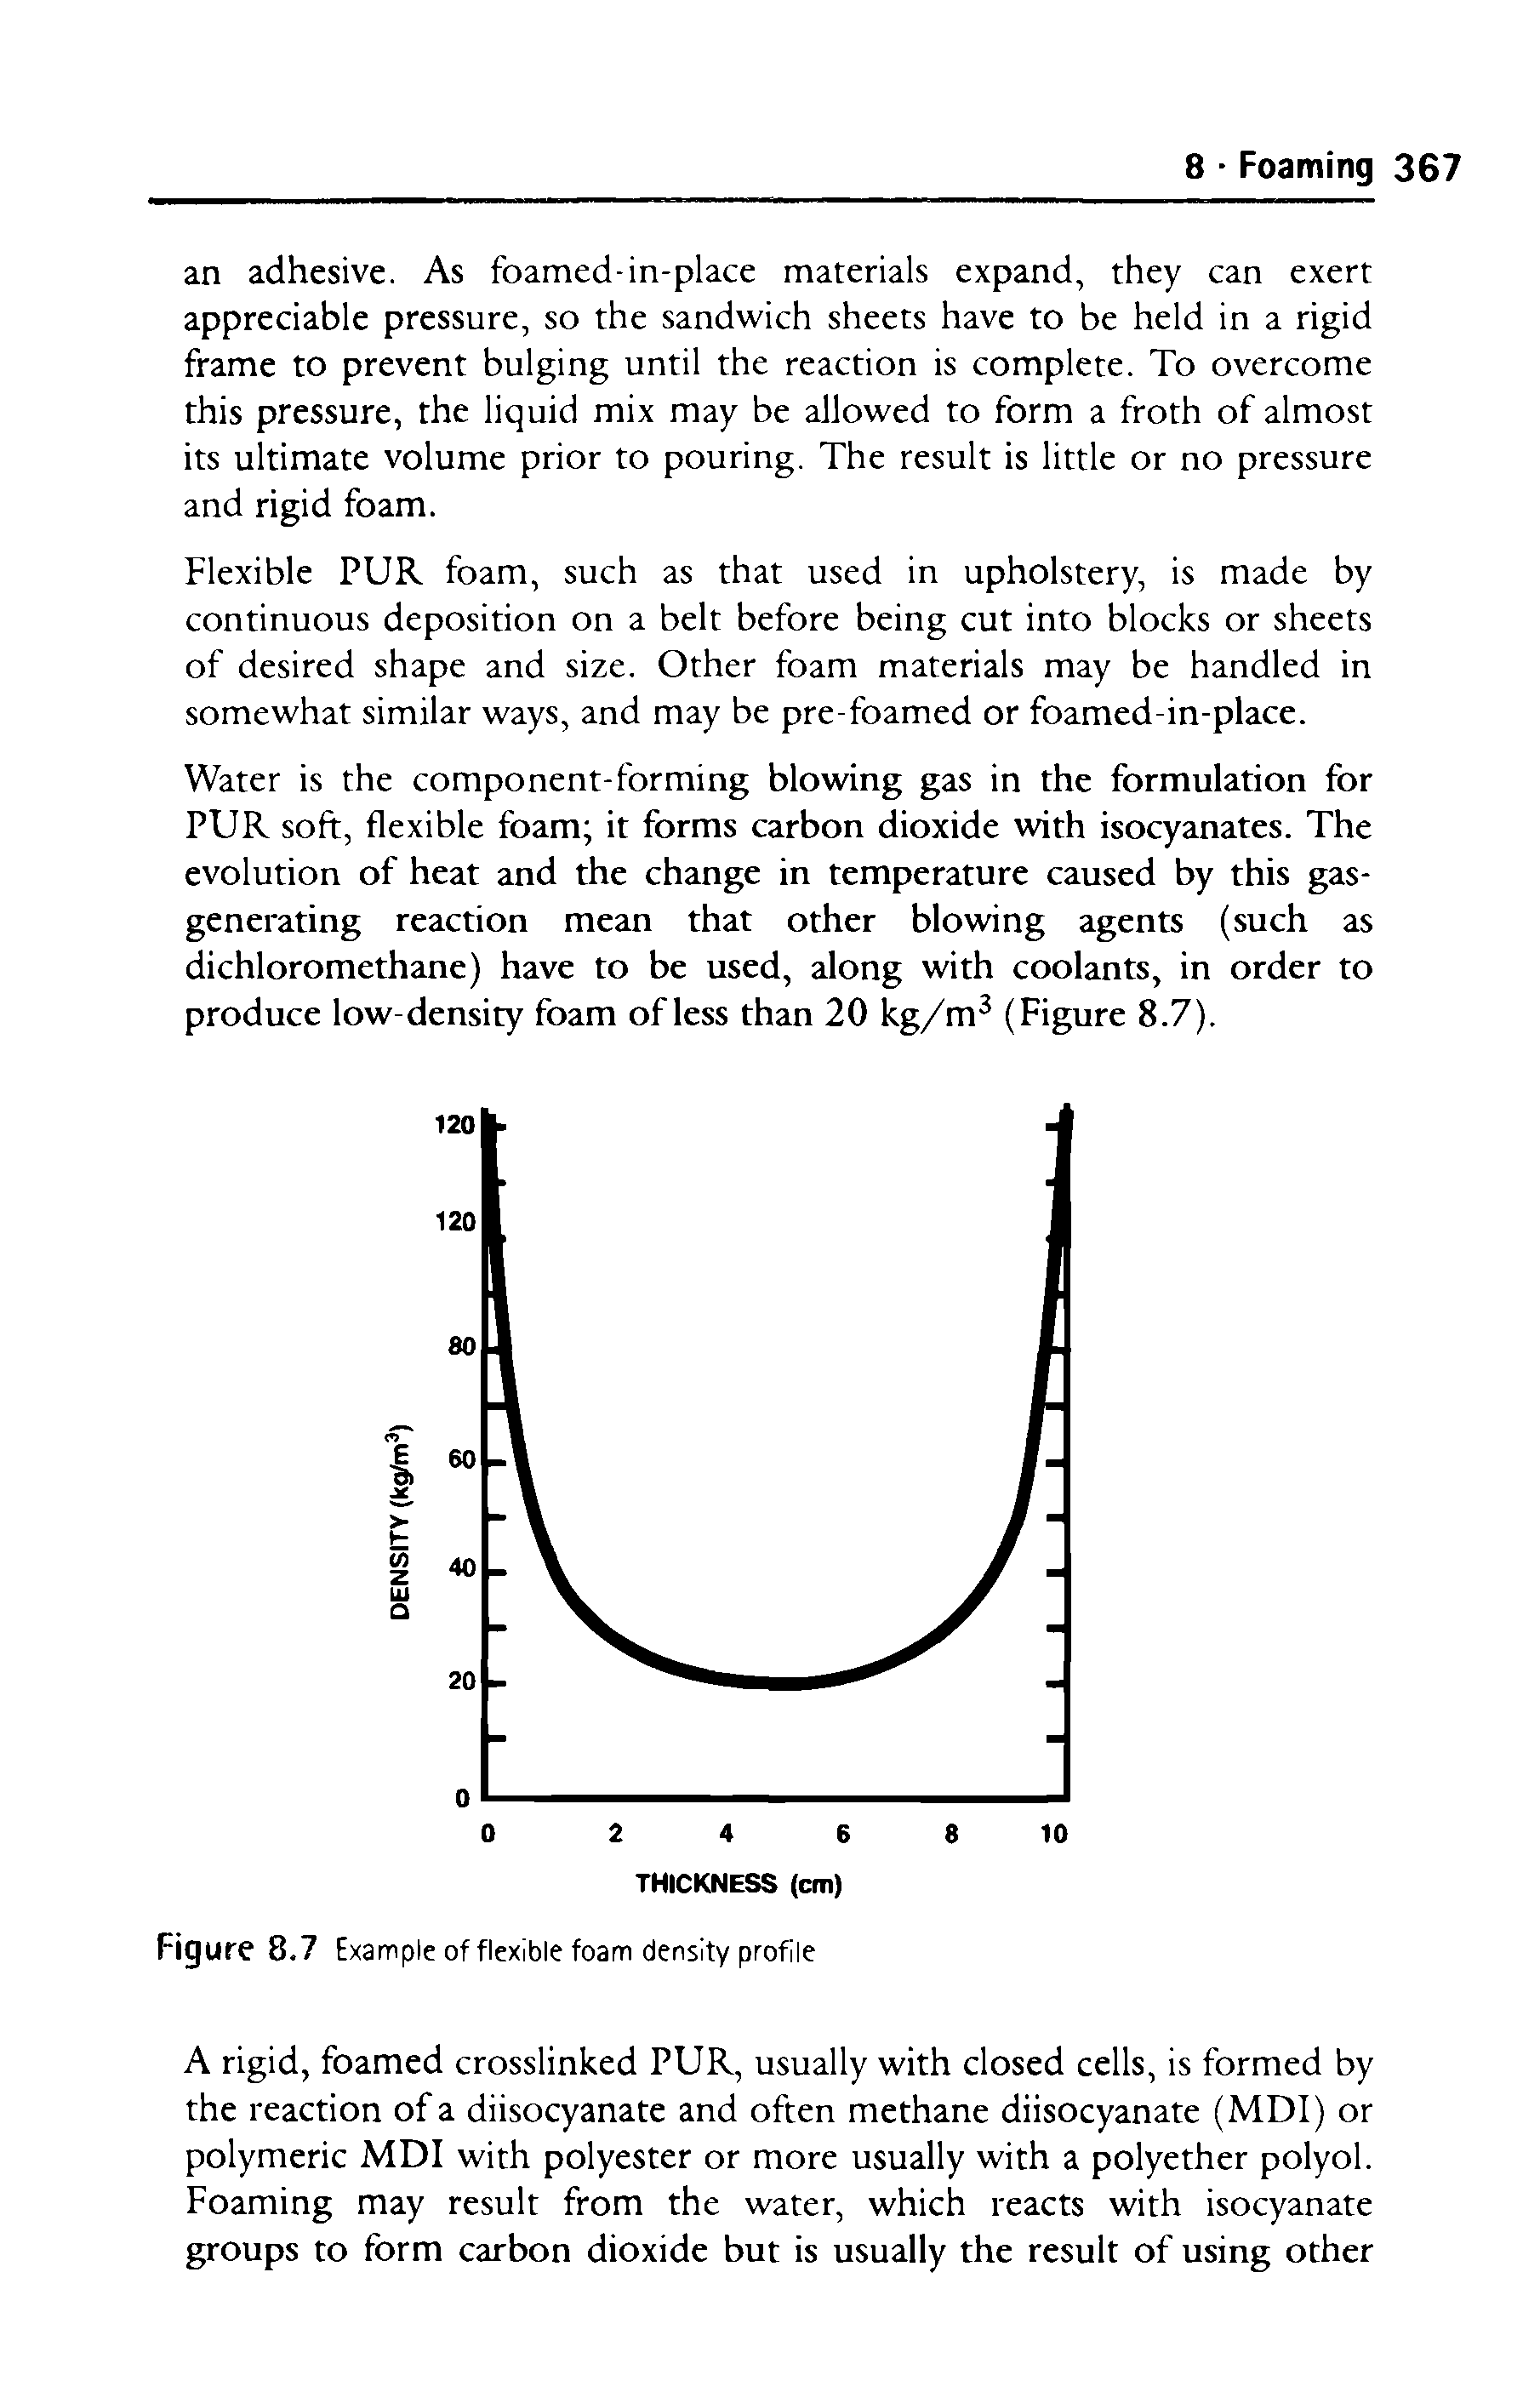 Figure 8.7 Example of flexible foam density profile...